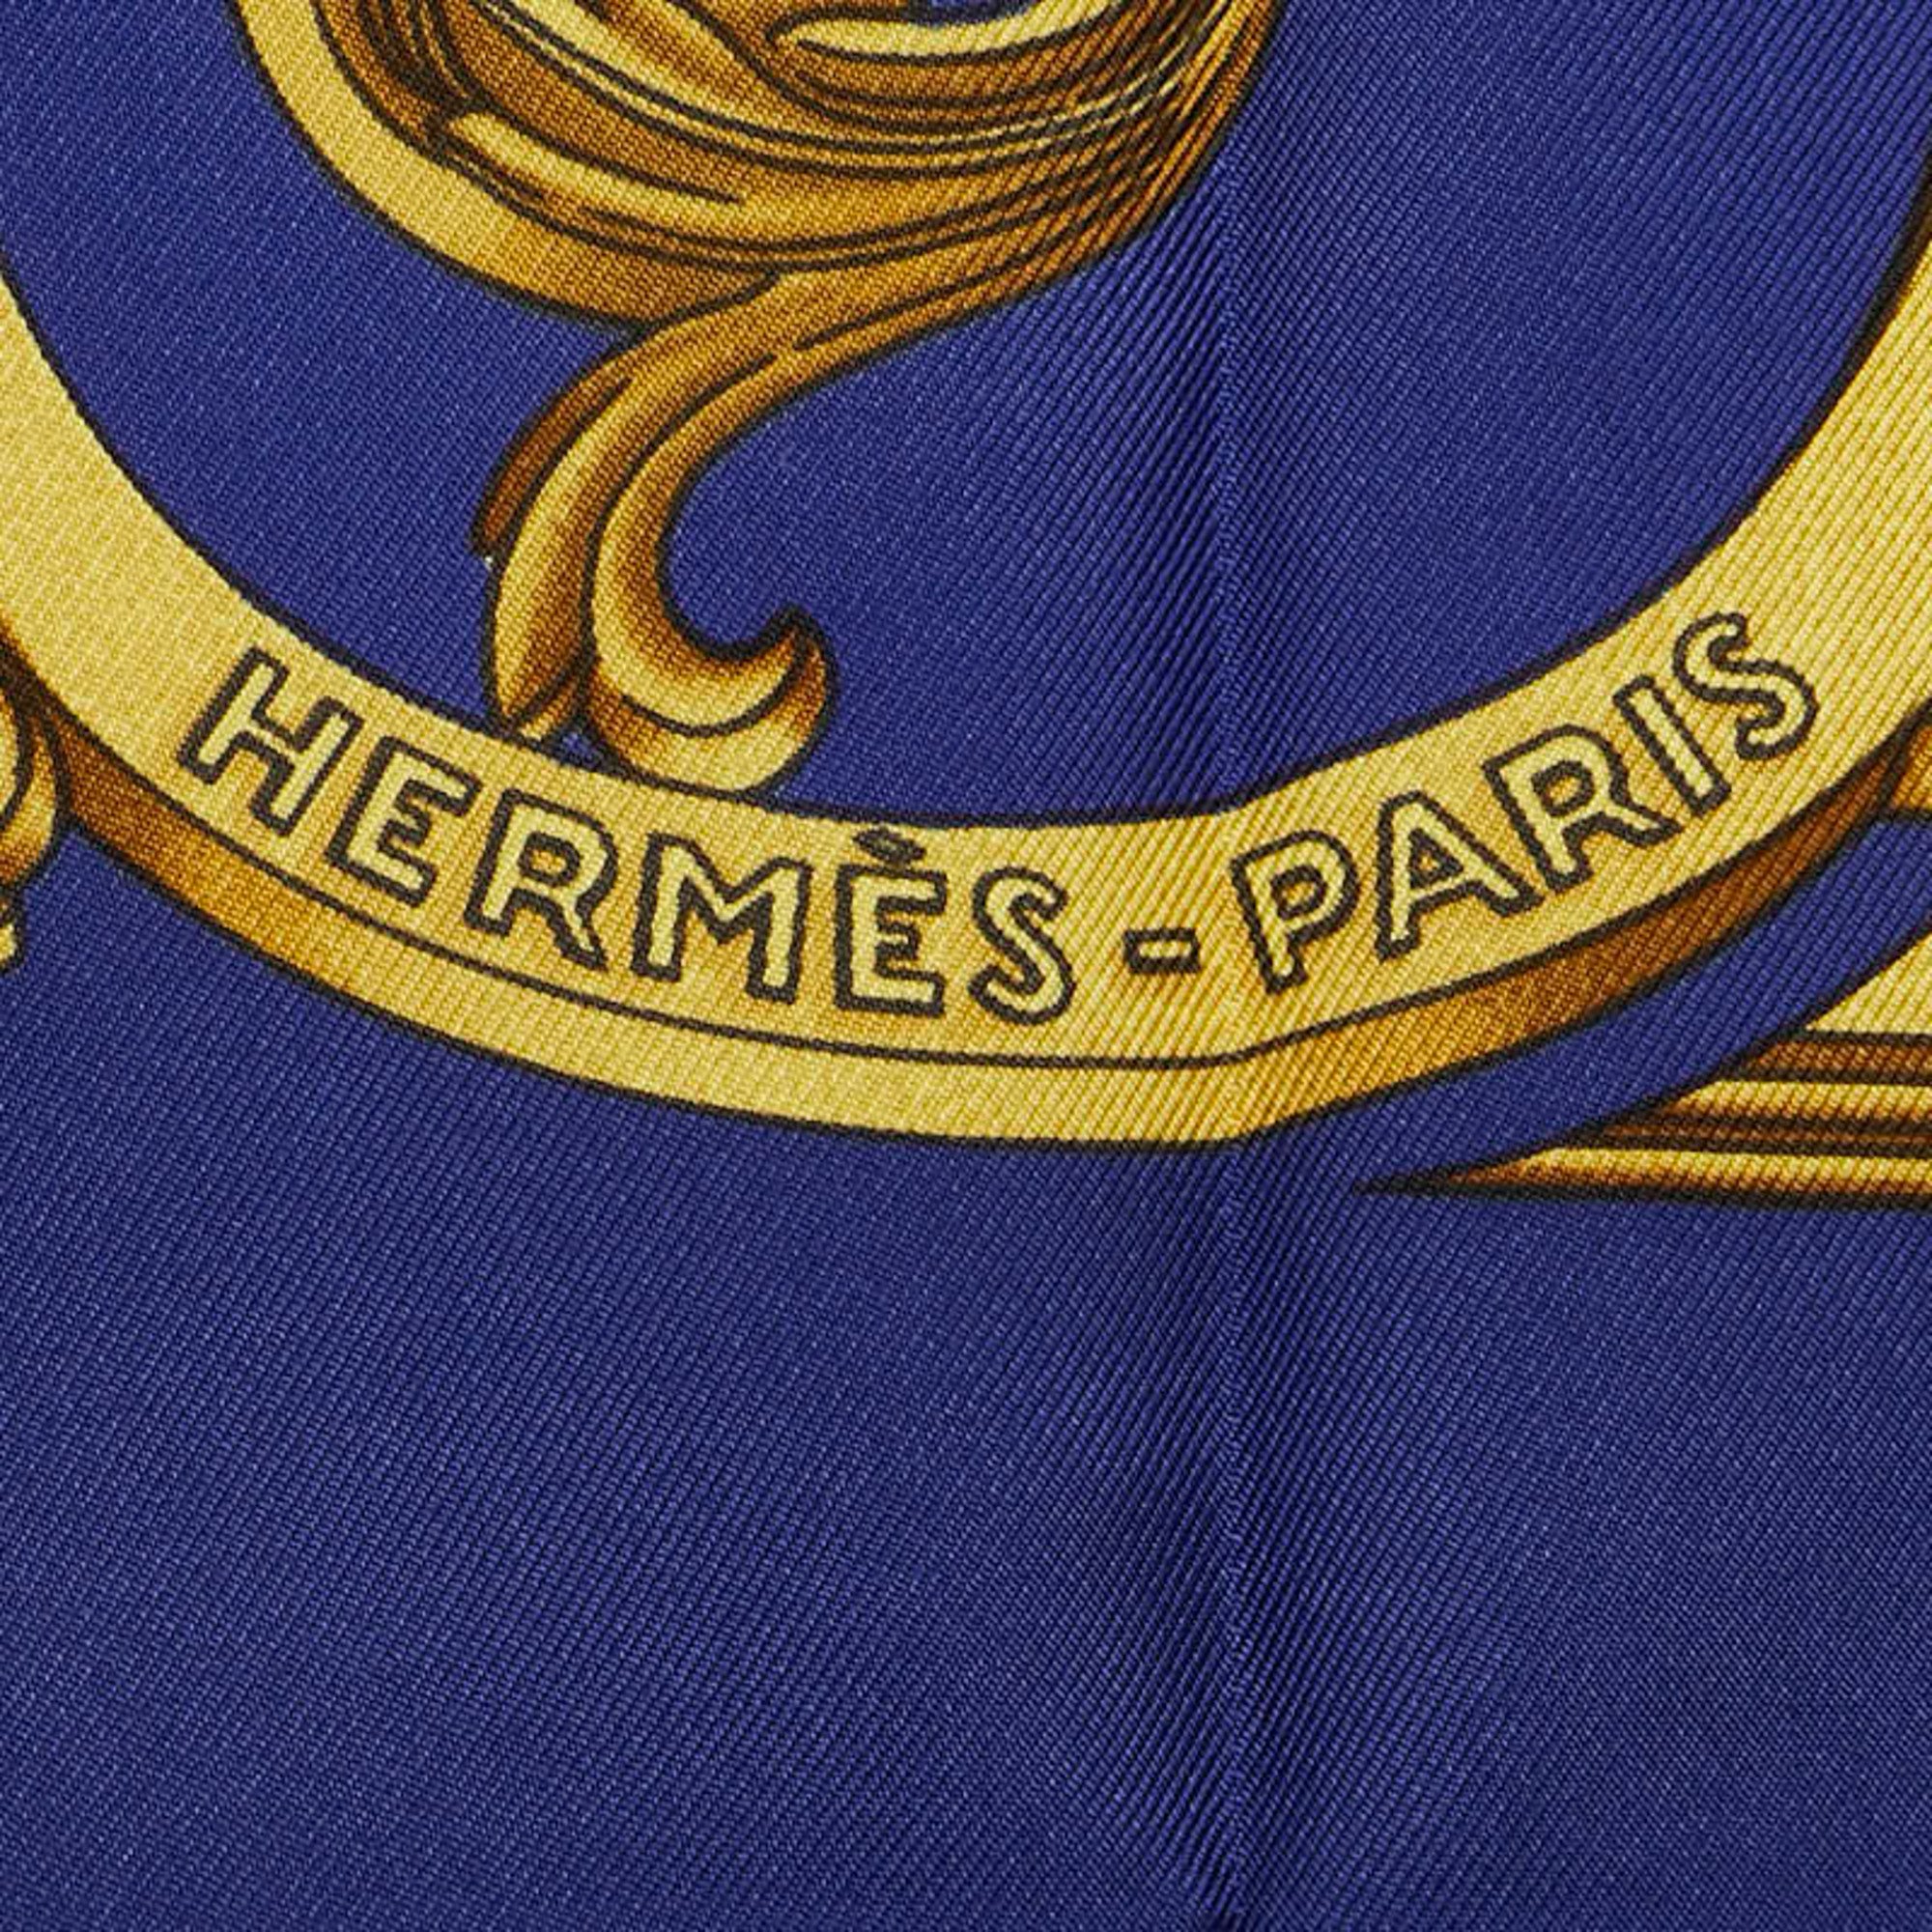 Hermes Carre 90 LES TUILERIES Tuileries Park Scarf Muffler Navy White Silk Women's HERMES